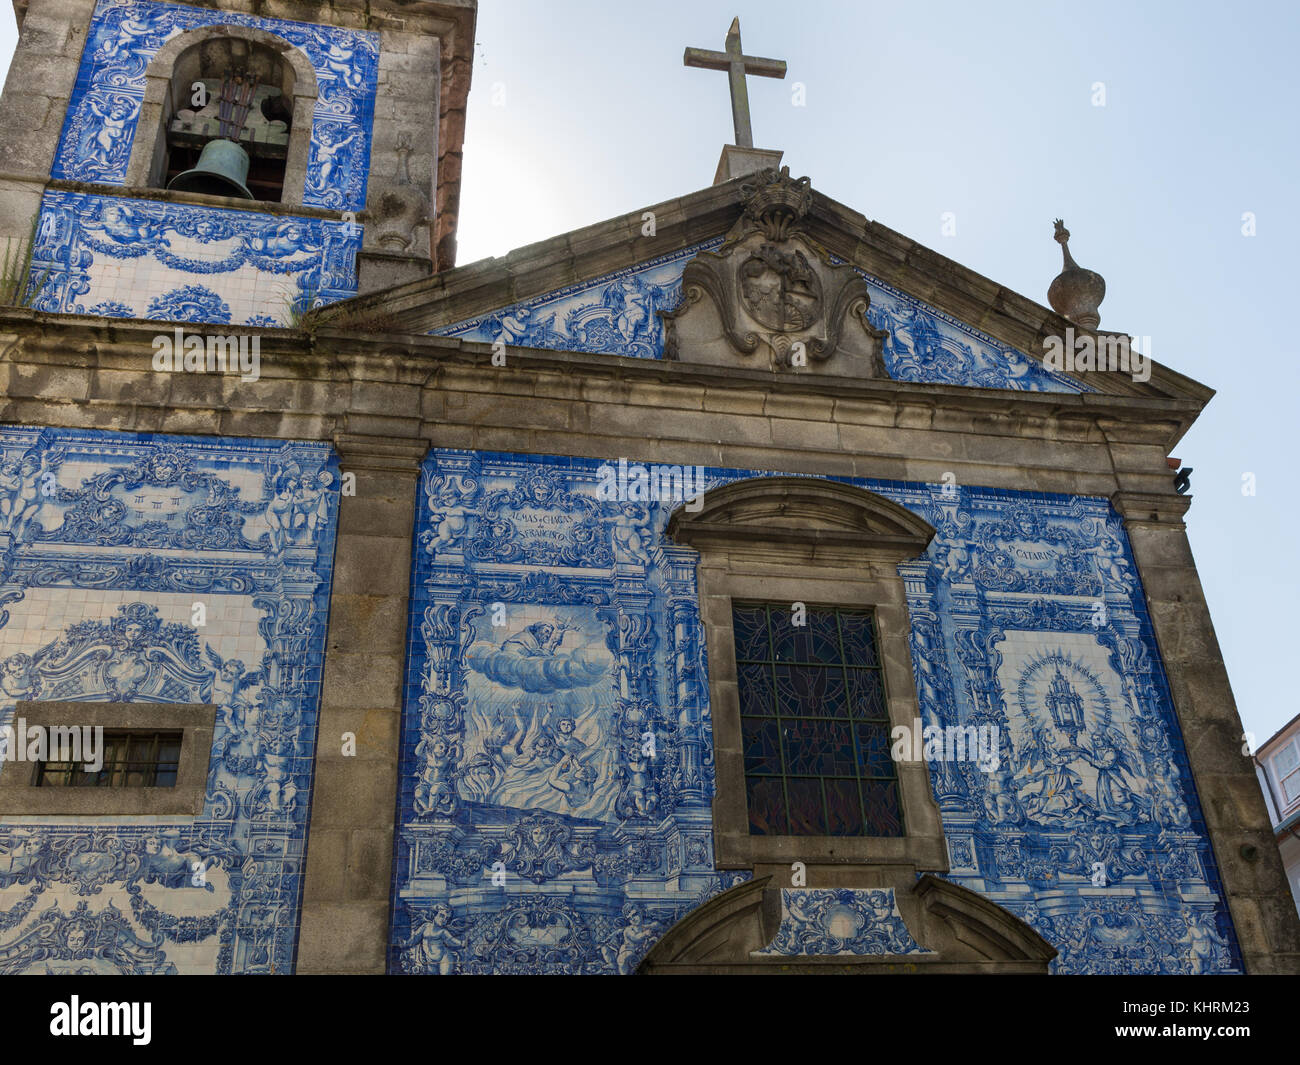 Capela das Almas dekoriert mit Azulejo Kacheln - Capela de Santa Catarina in Porto, Portugal. Stockfoto